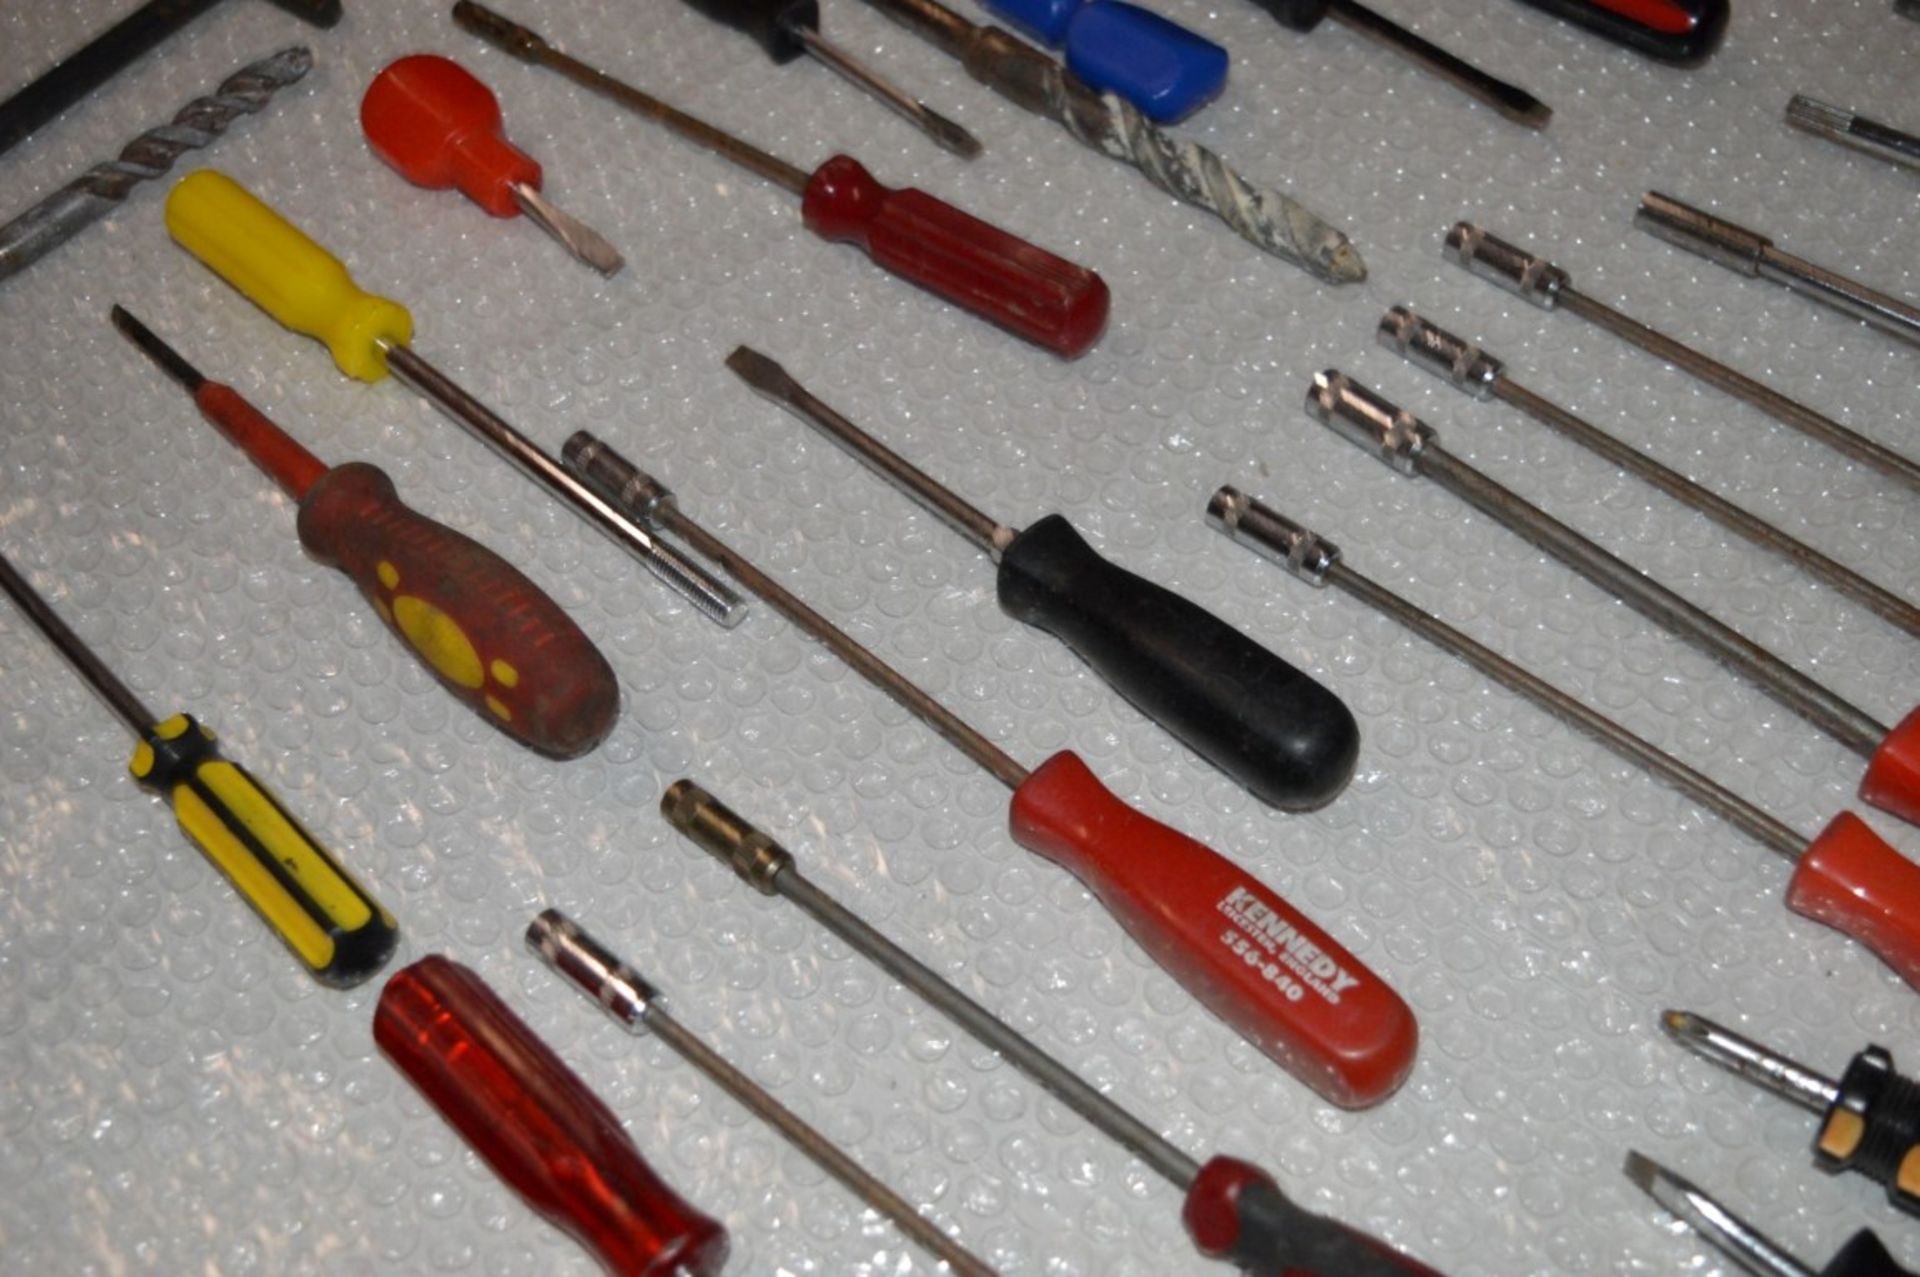 54 x Various Hand Tools Iincluding Screwdrivers, Saws, Bores, Drill Bits, Allen Keys, Hex Head Screw - Image 5 of 15